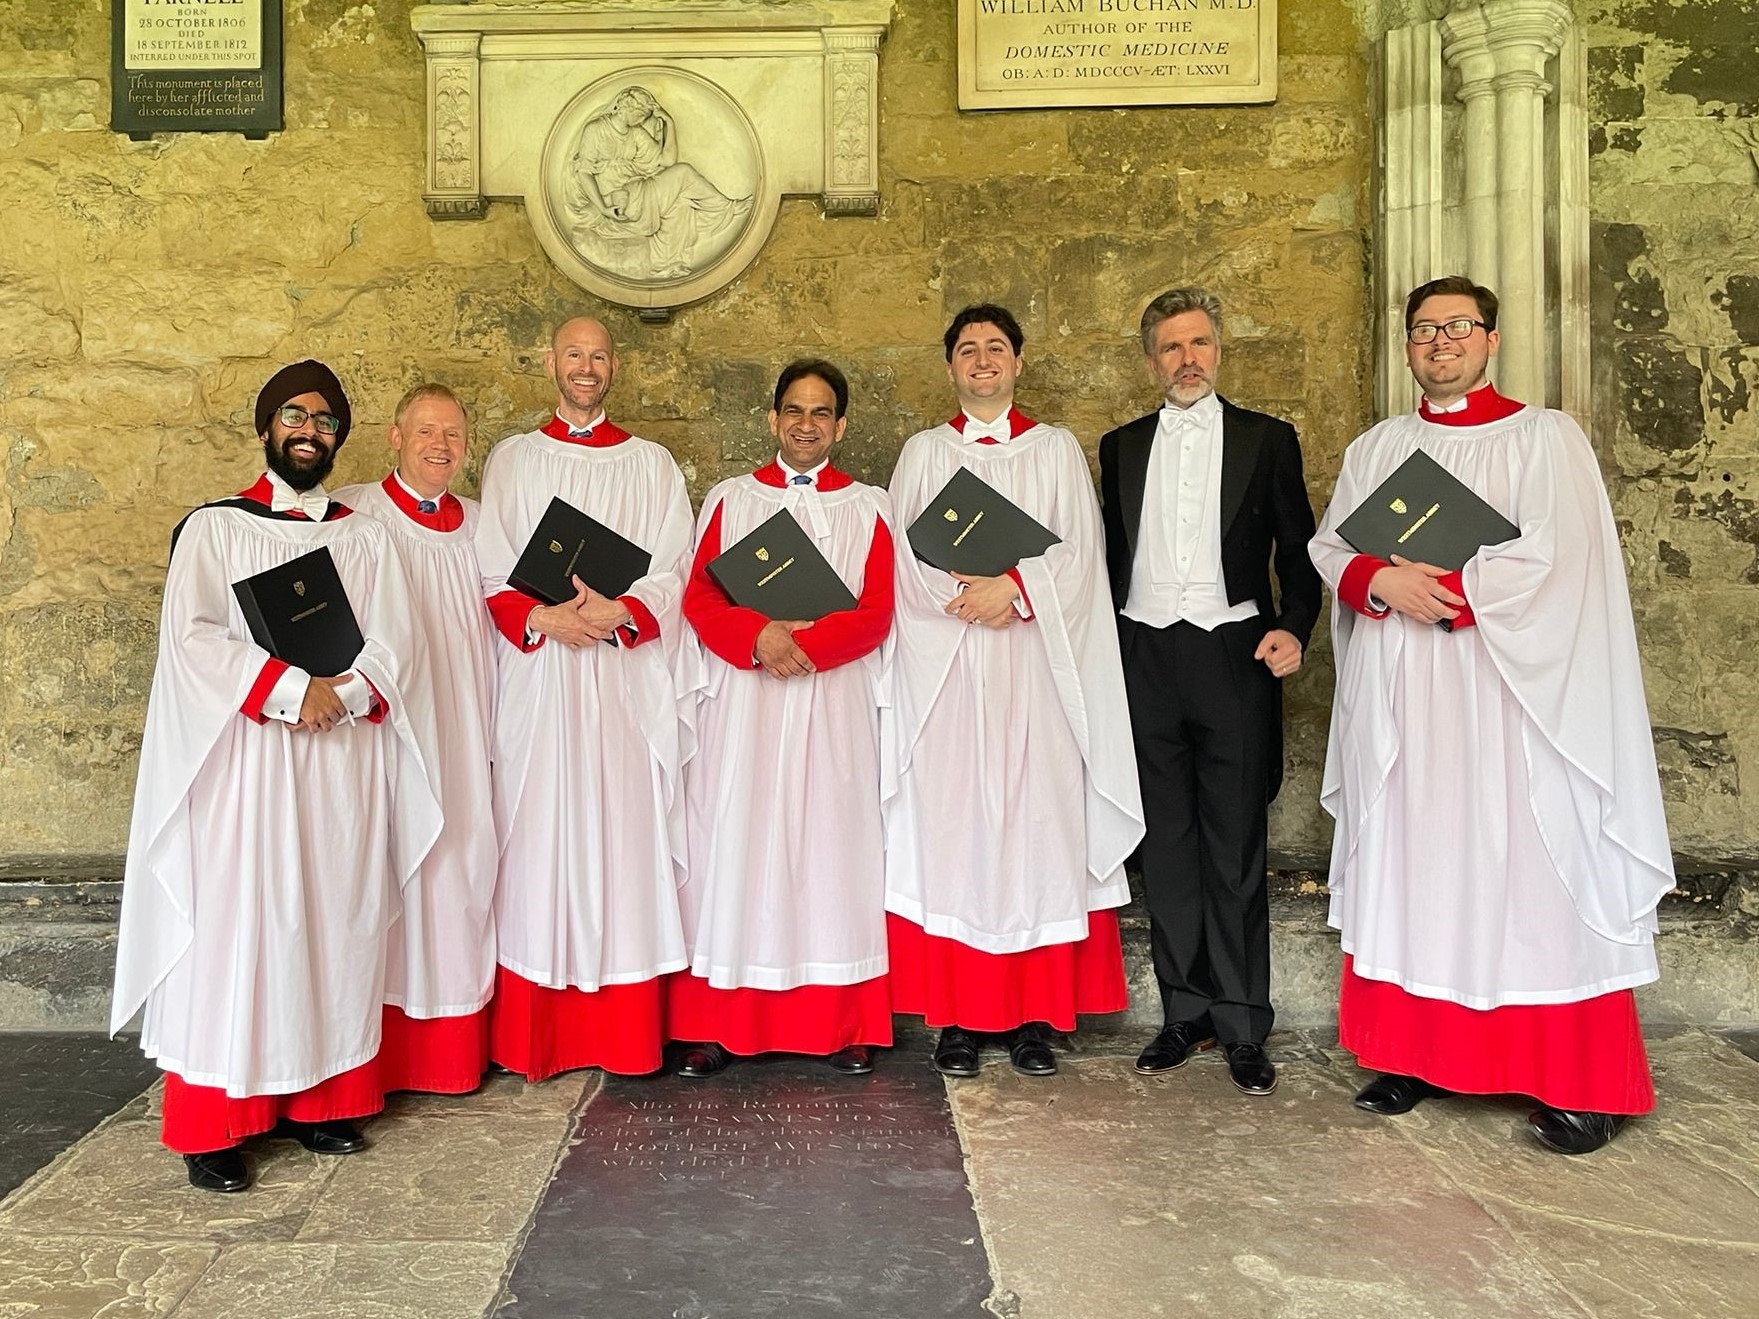 St John's musicians in the Coronation